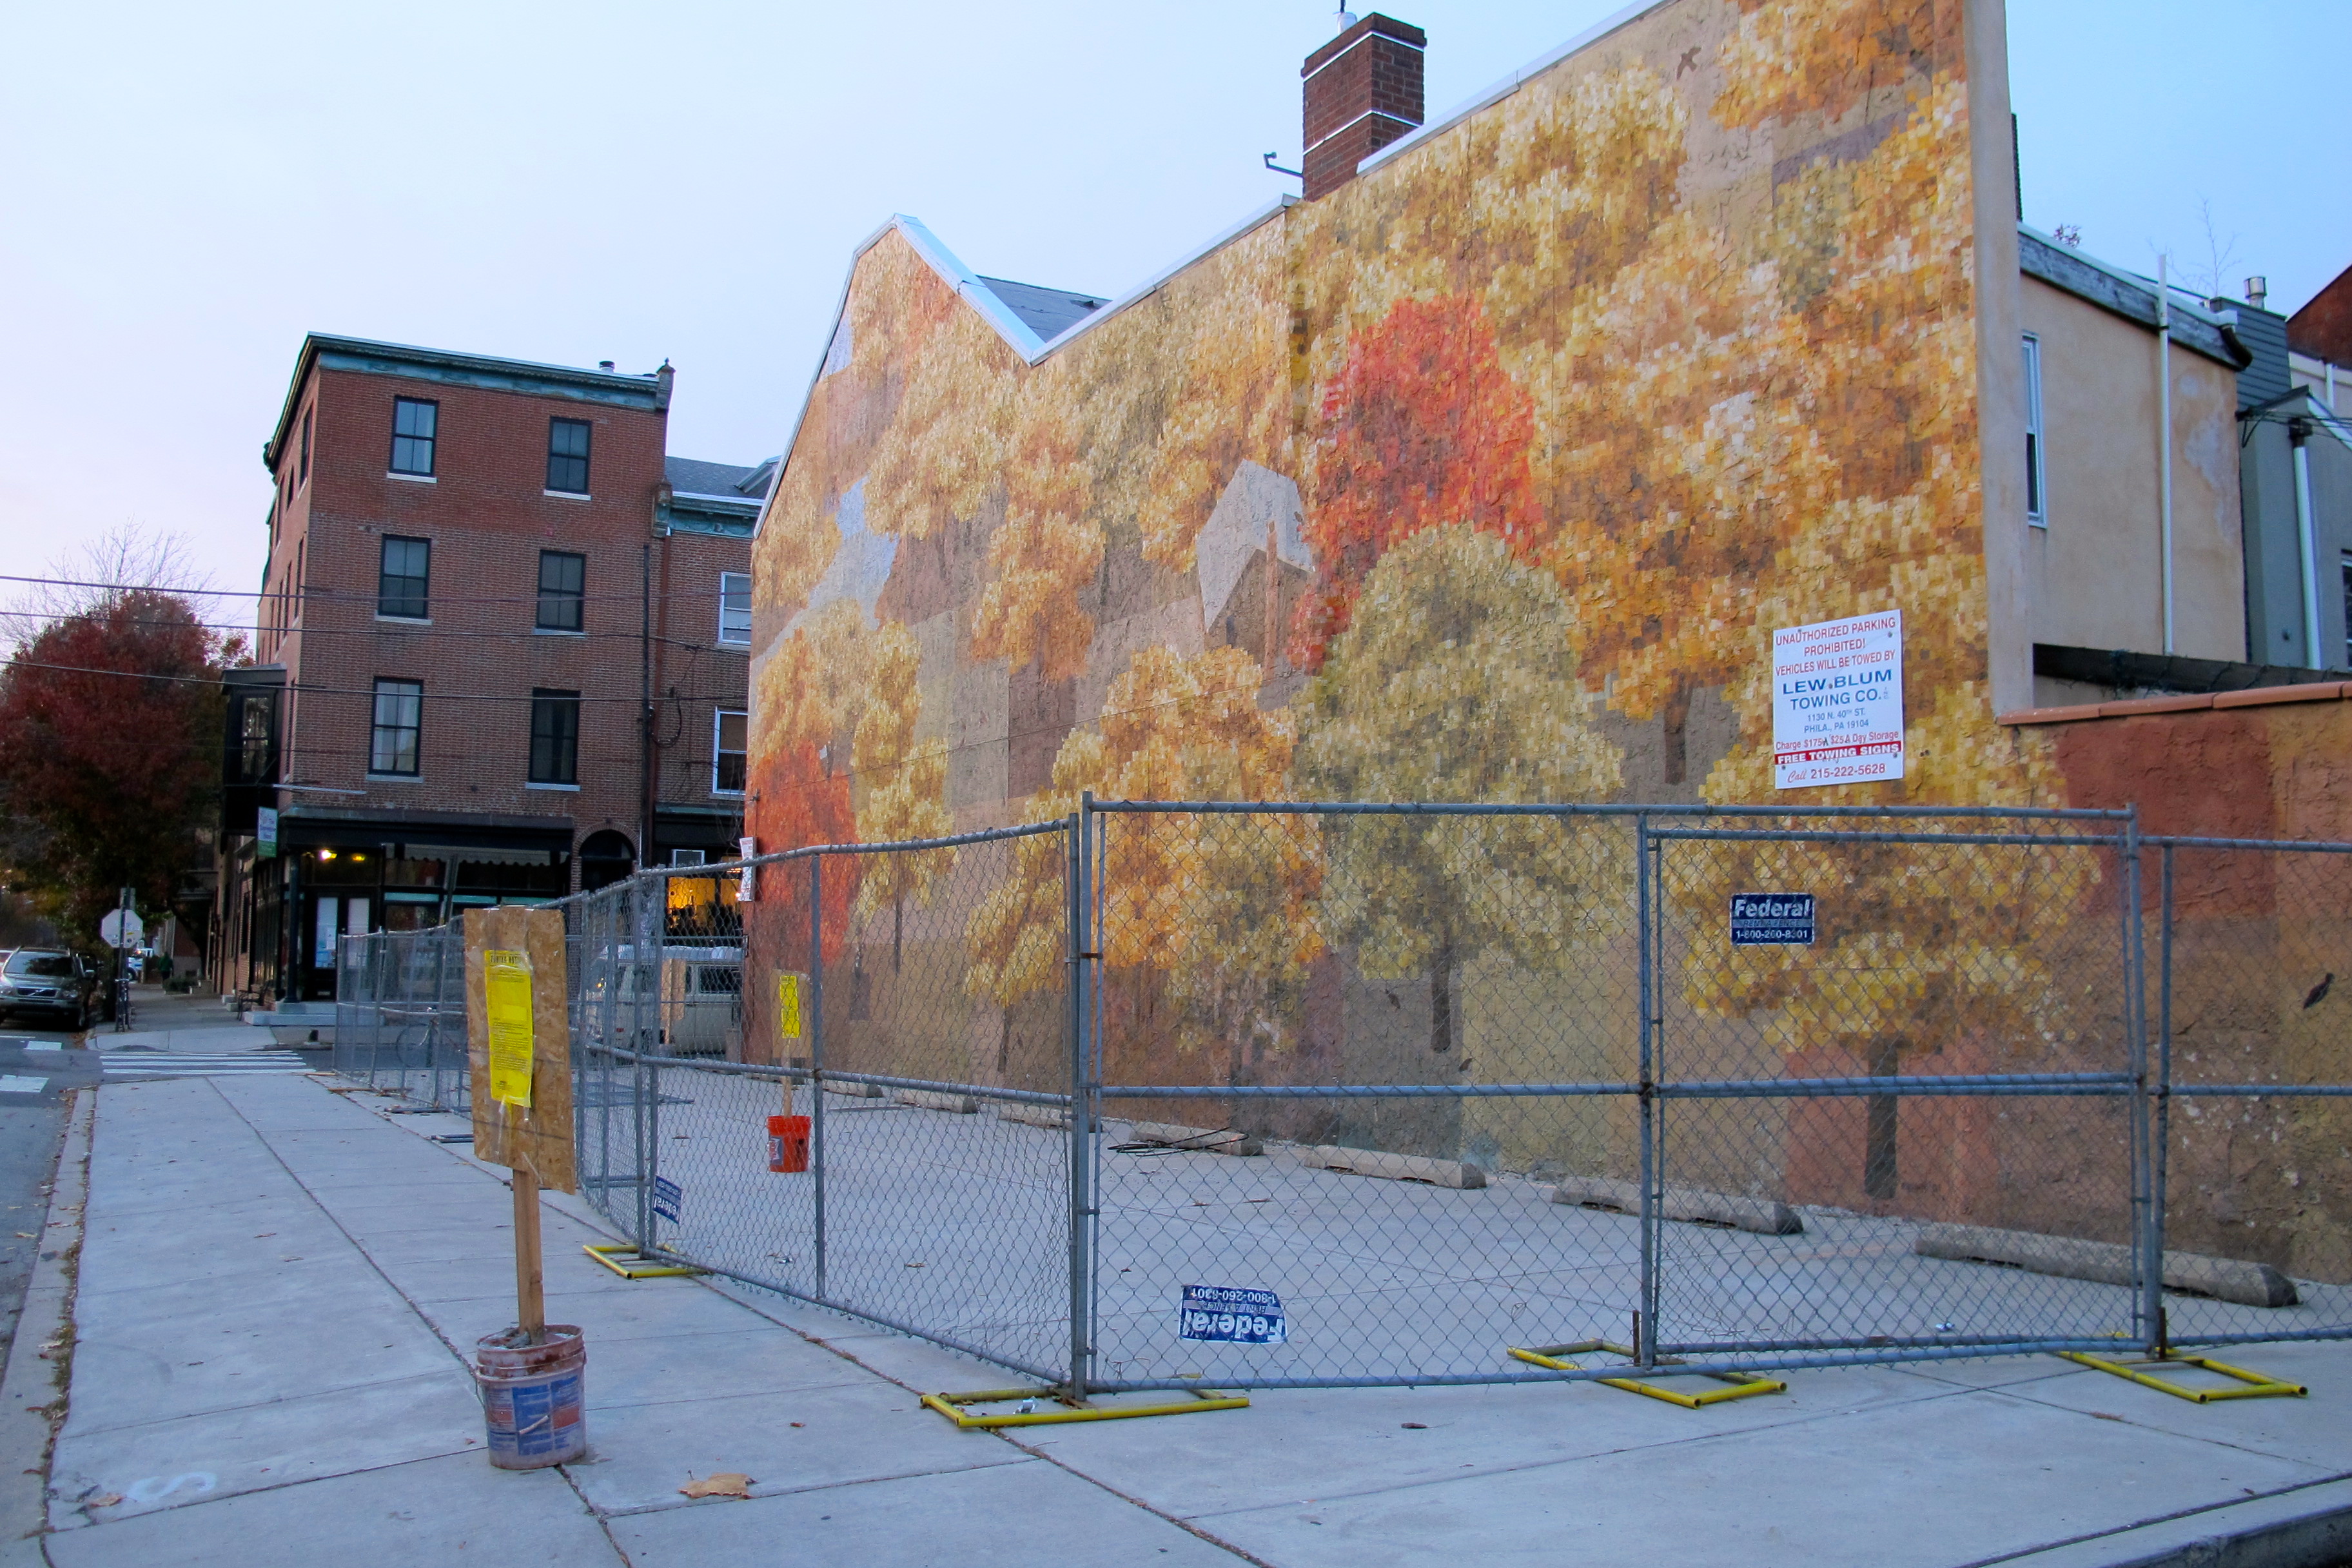 David Guinn's mural at 9th and Bainbridge gets fenced.